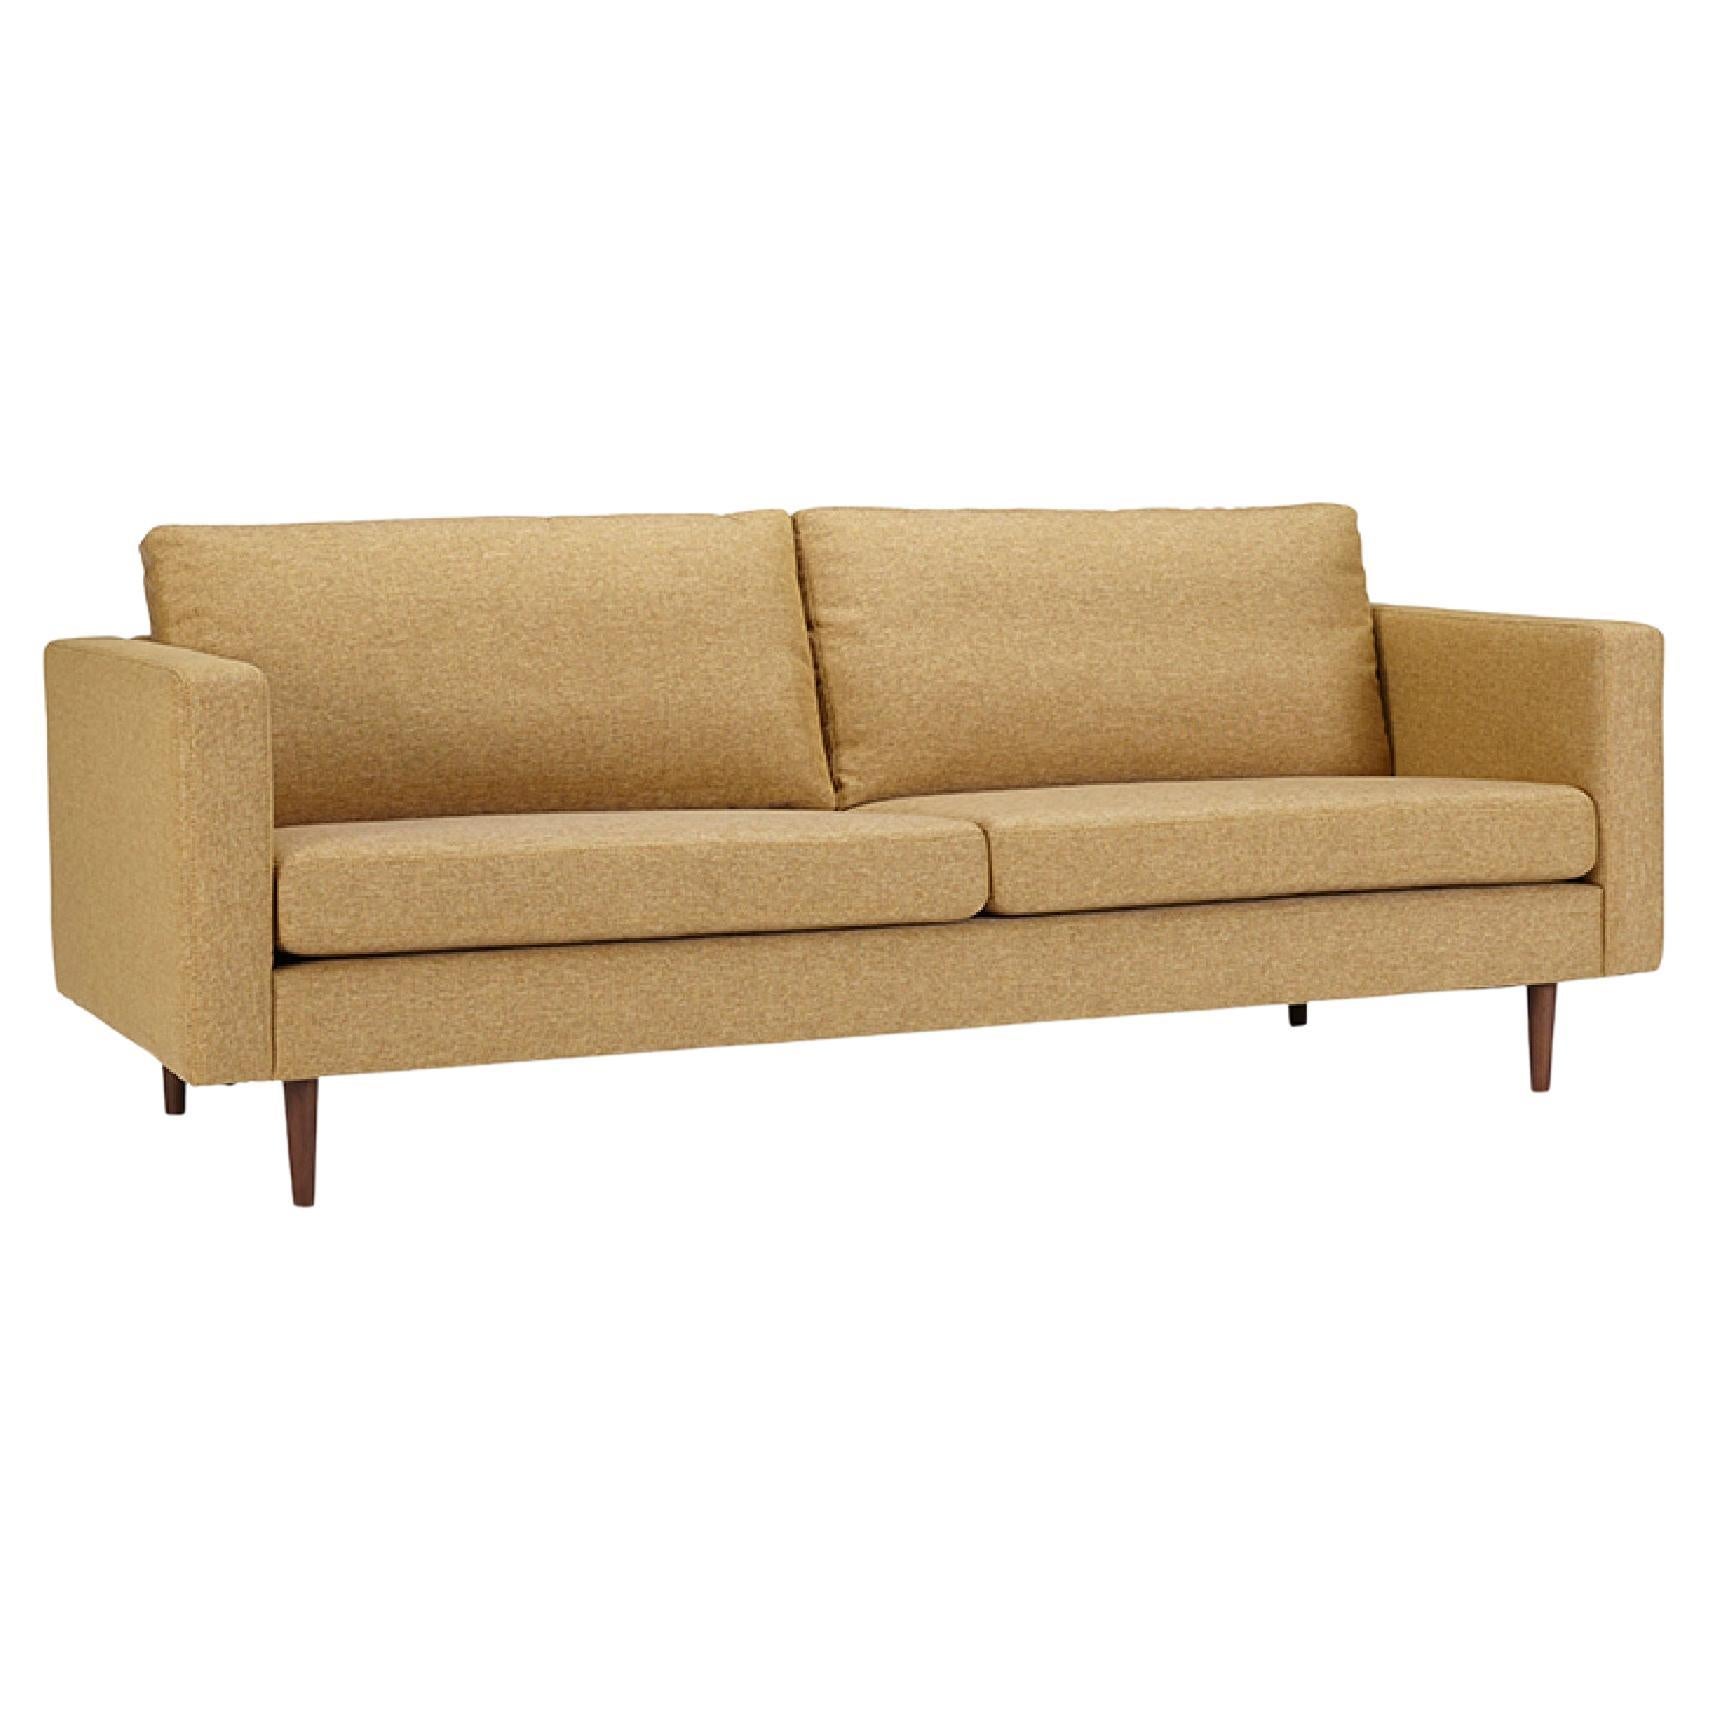  Hayche Clasico 3 Seater Sofa - Yellow, UK, Made to Order